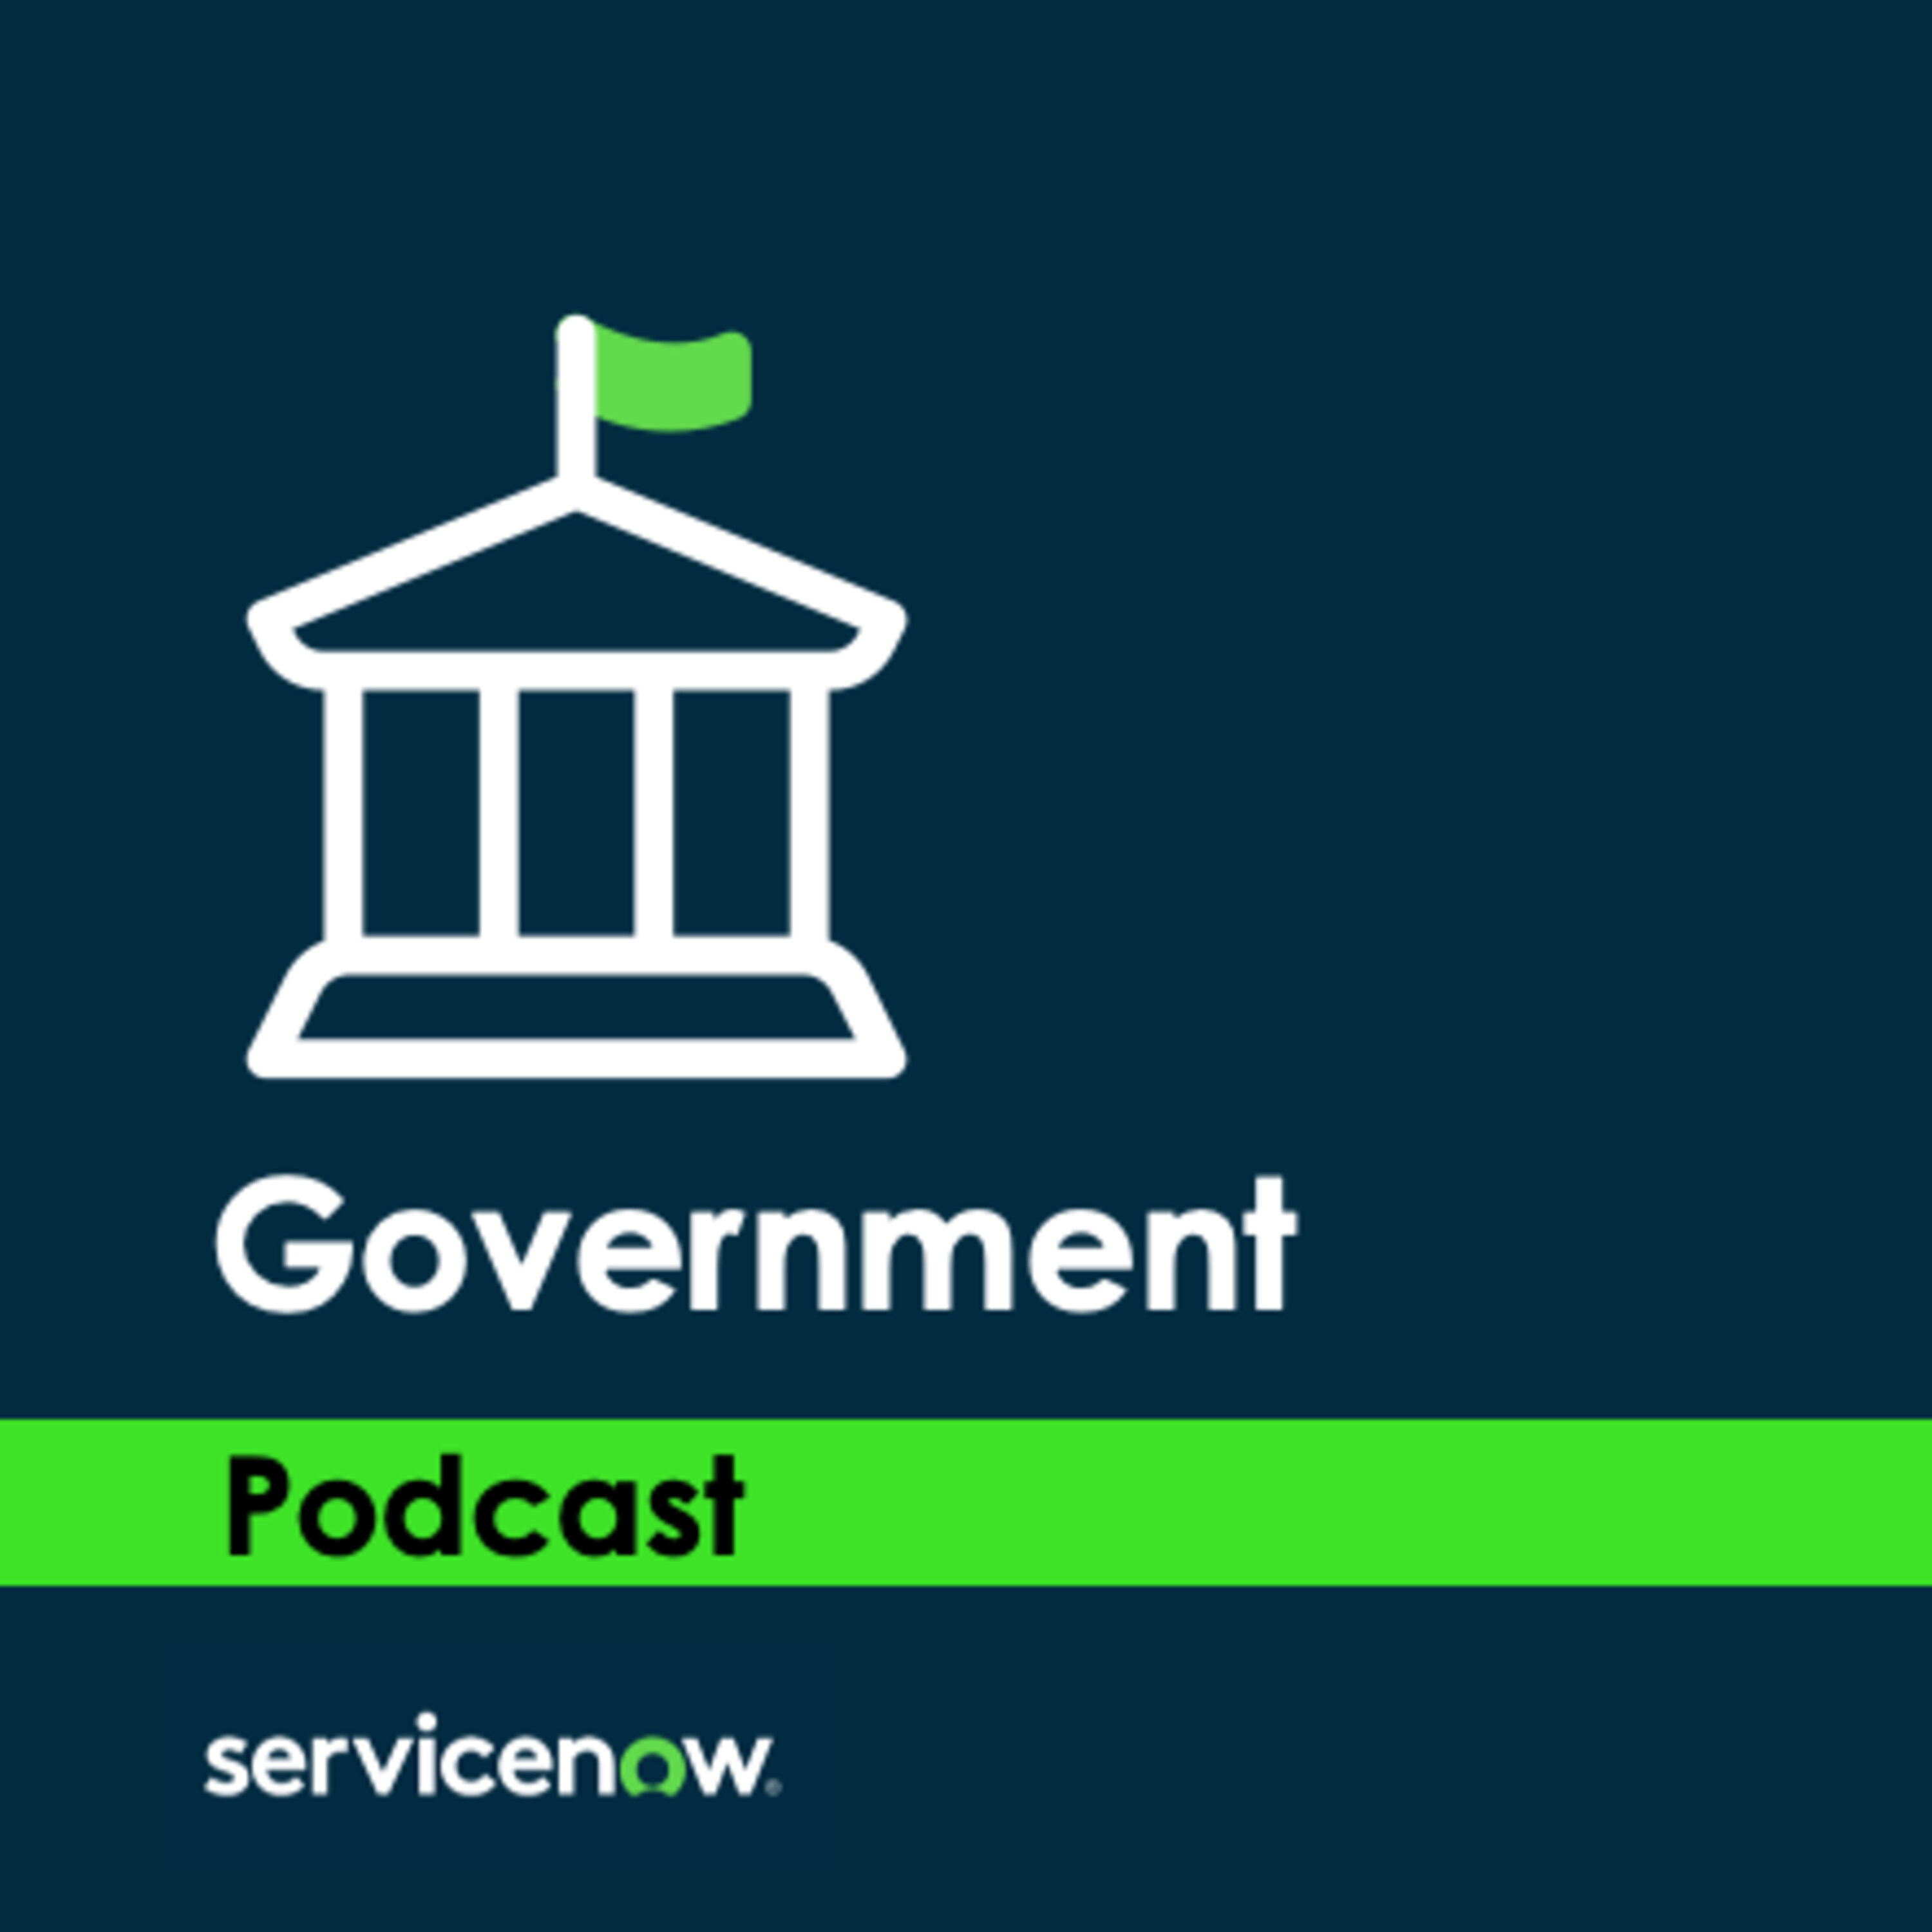 ServiceNow Government Transformation Series - Veterans Edition: Yolanda Inchauregui, Sr. Manager, Support Account Management Services at ServiceNow